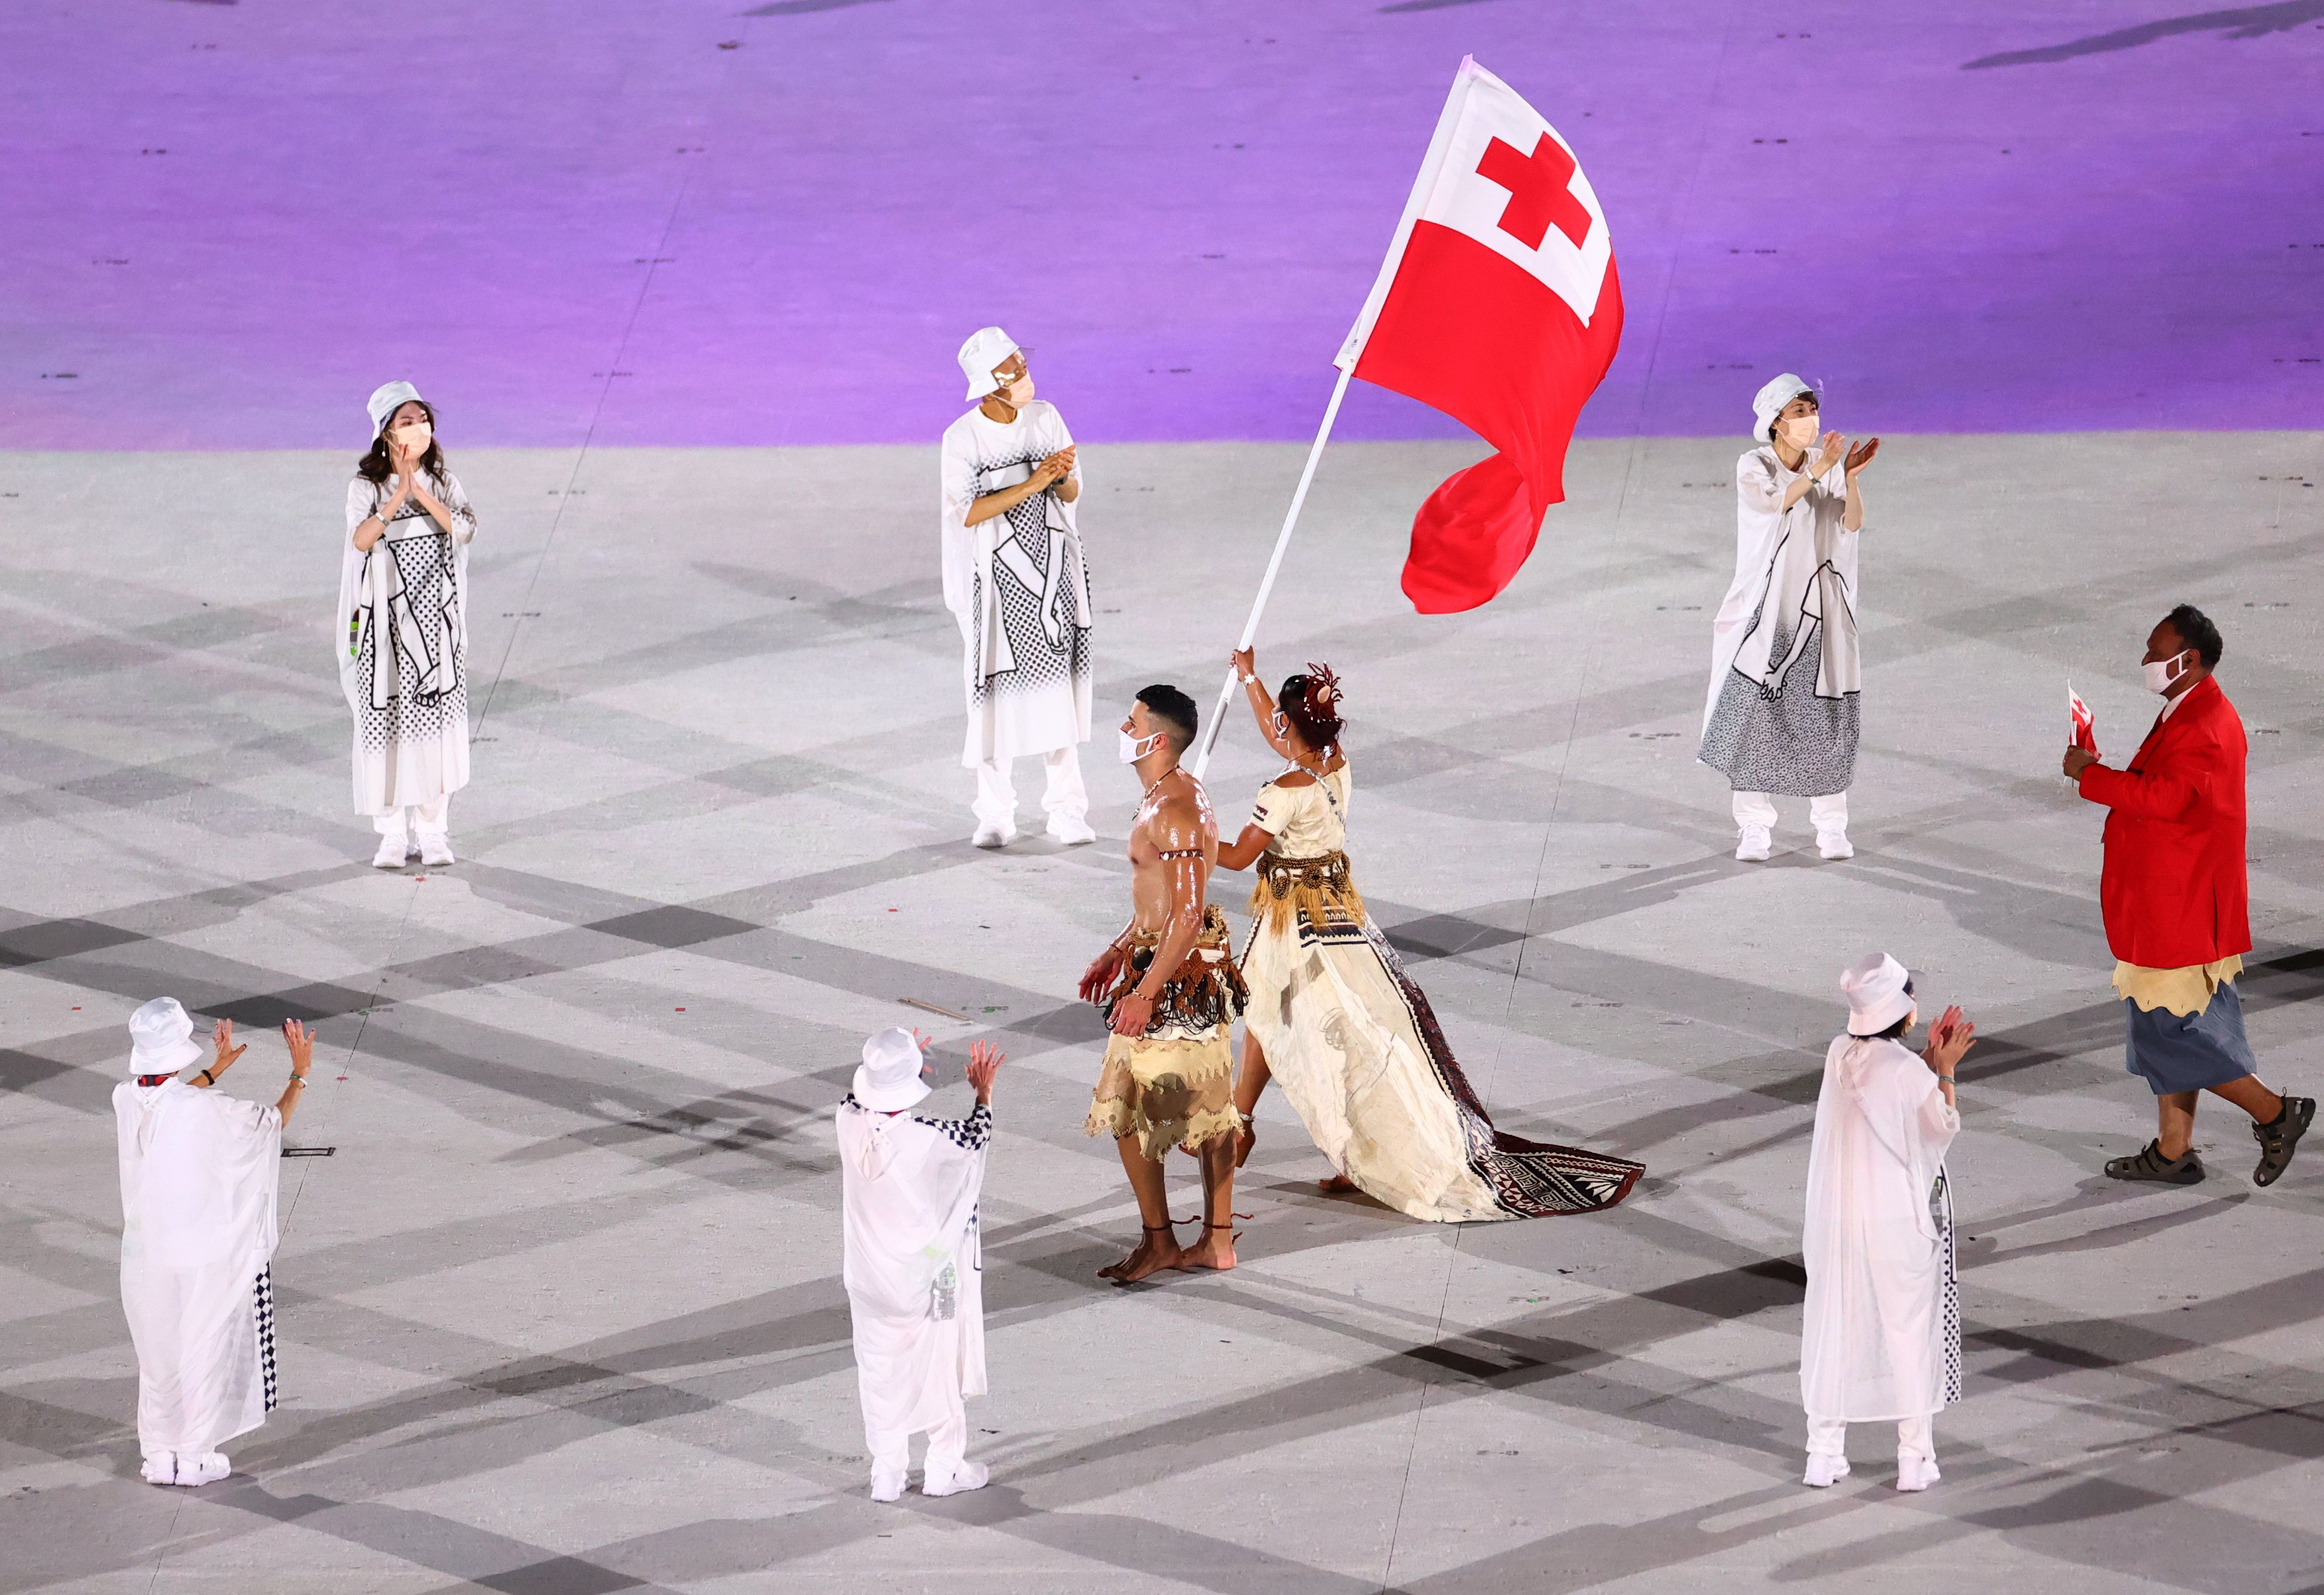 Pita Taufatofua, de Tonga, nuevamente protagonista de una ceremonia inaugural (REUTERS/Marko Djurica)